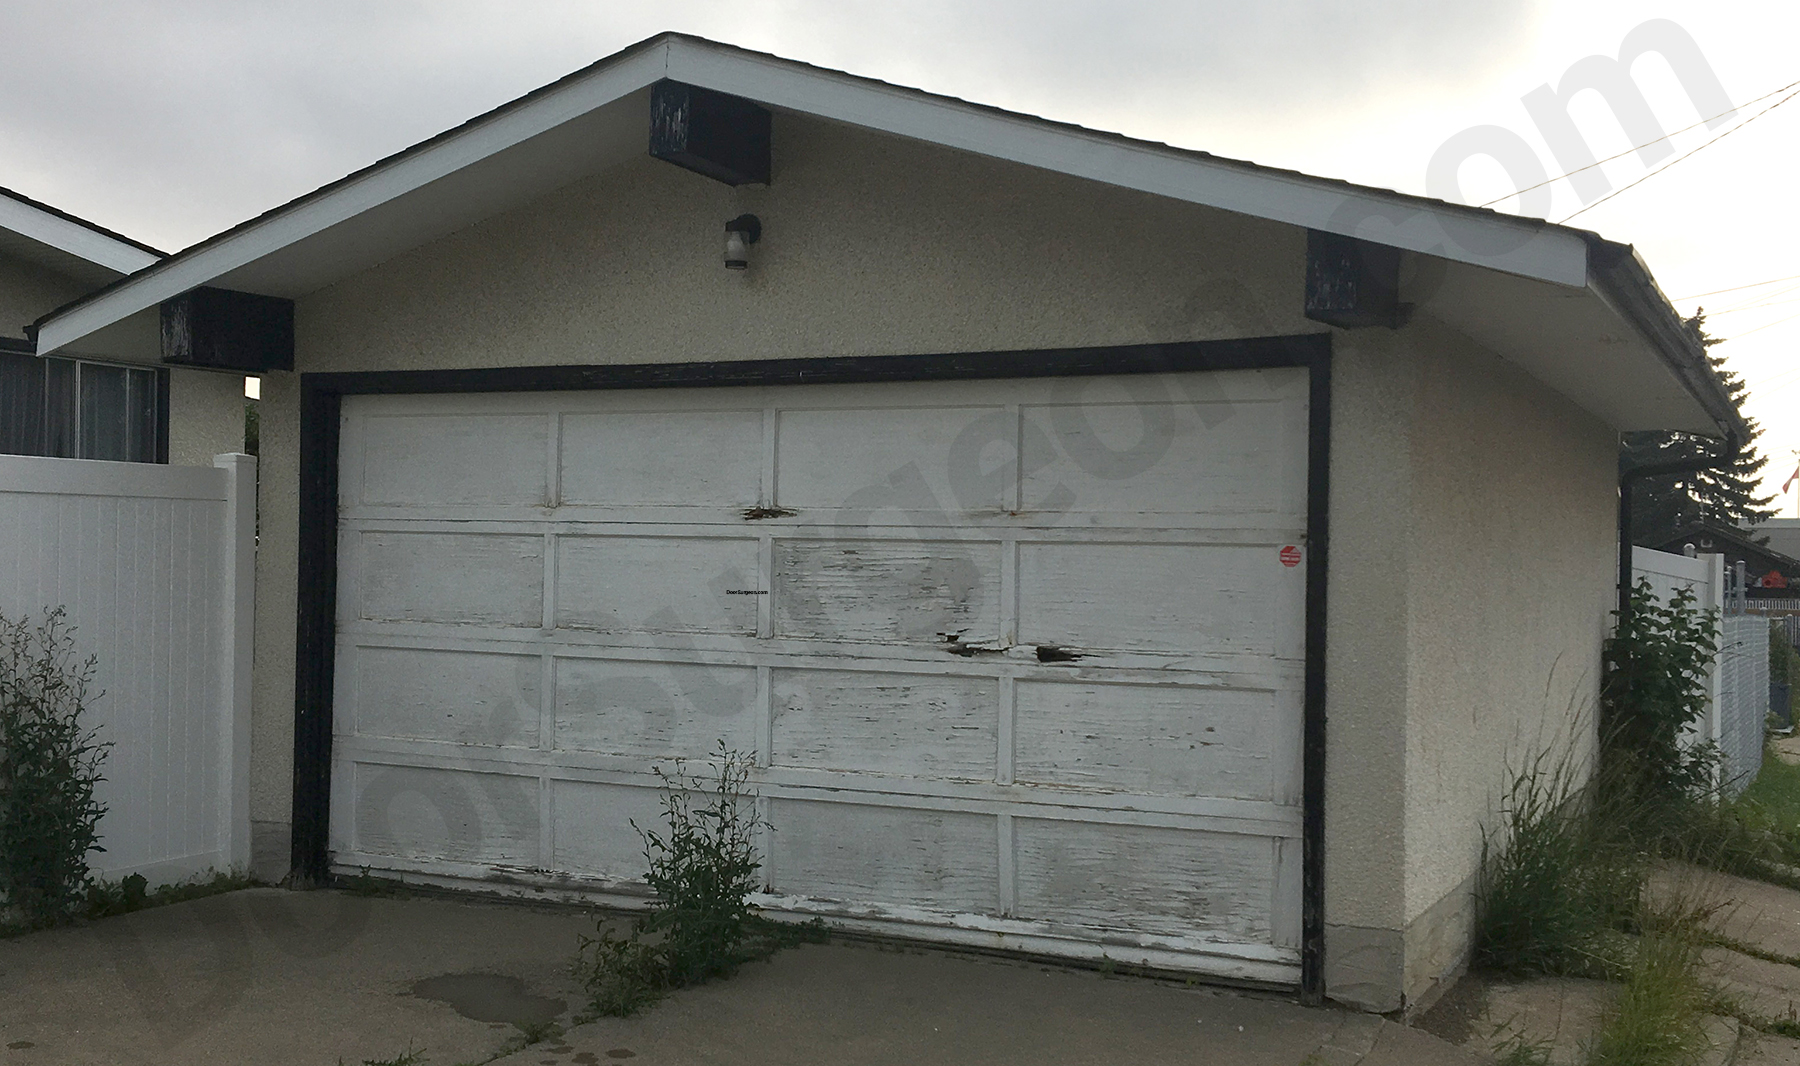 South Edmonton garage door removal & disposal of old garage door panels track rollers hinges springs